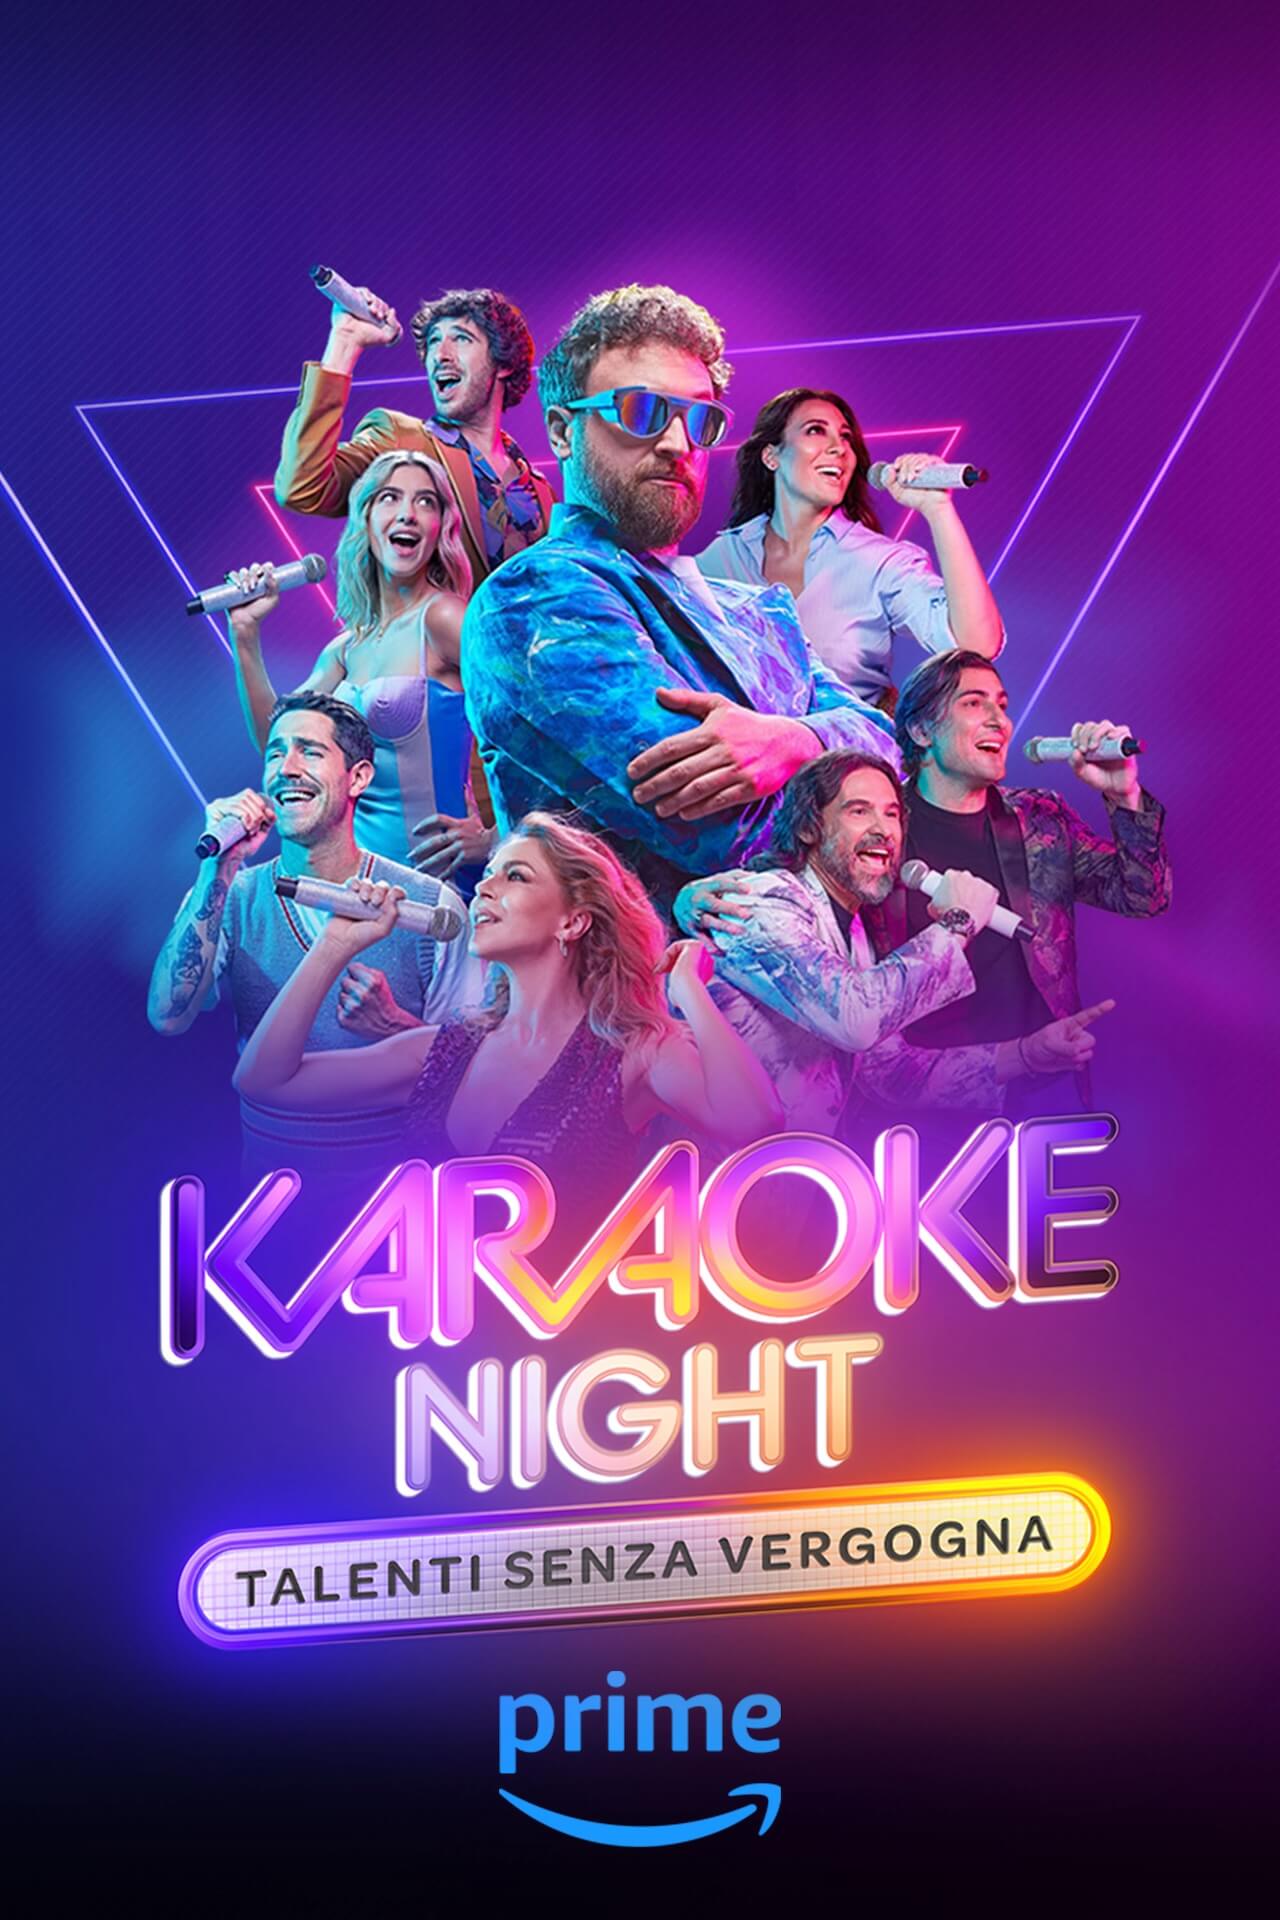 Karaoke Night - Talenti Senza Vergogna, su Prime Video lo show con Ventola e Lele Adani